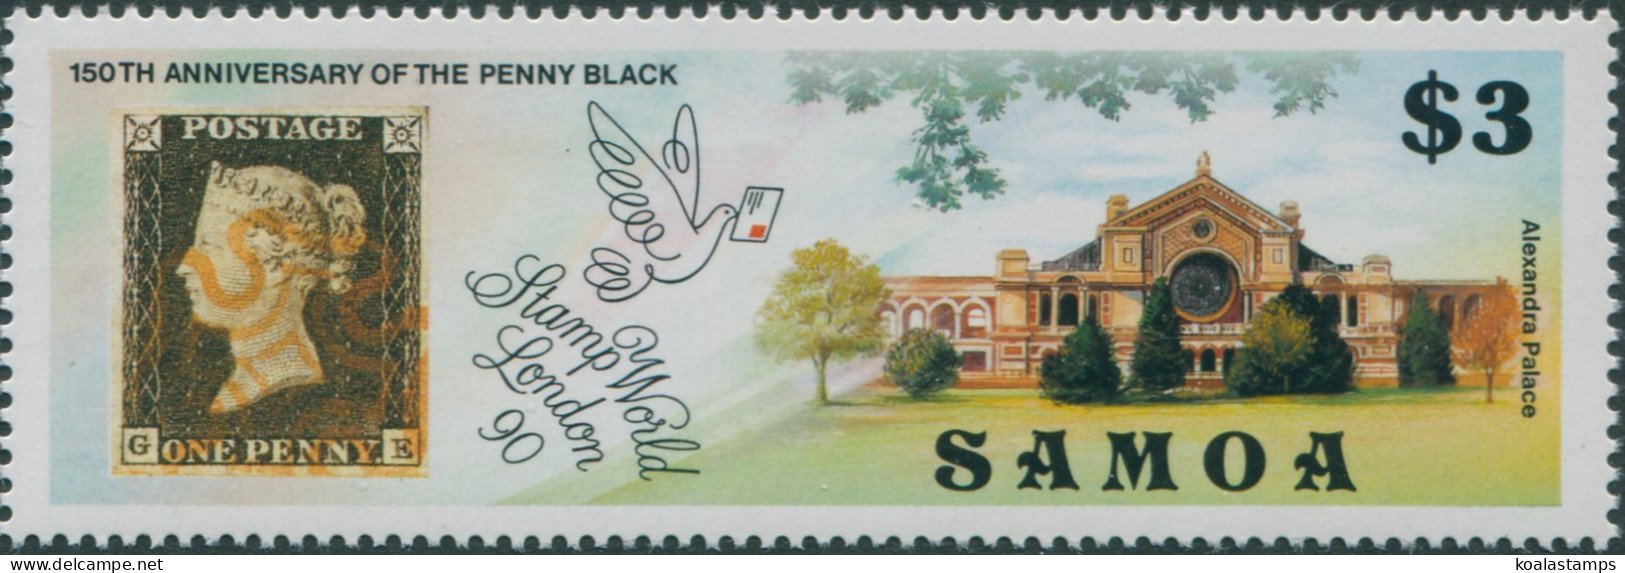 Samoa 1990 SG846 $3 Stampworld London Penny Black MNH - Samoa (Staat)